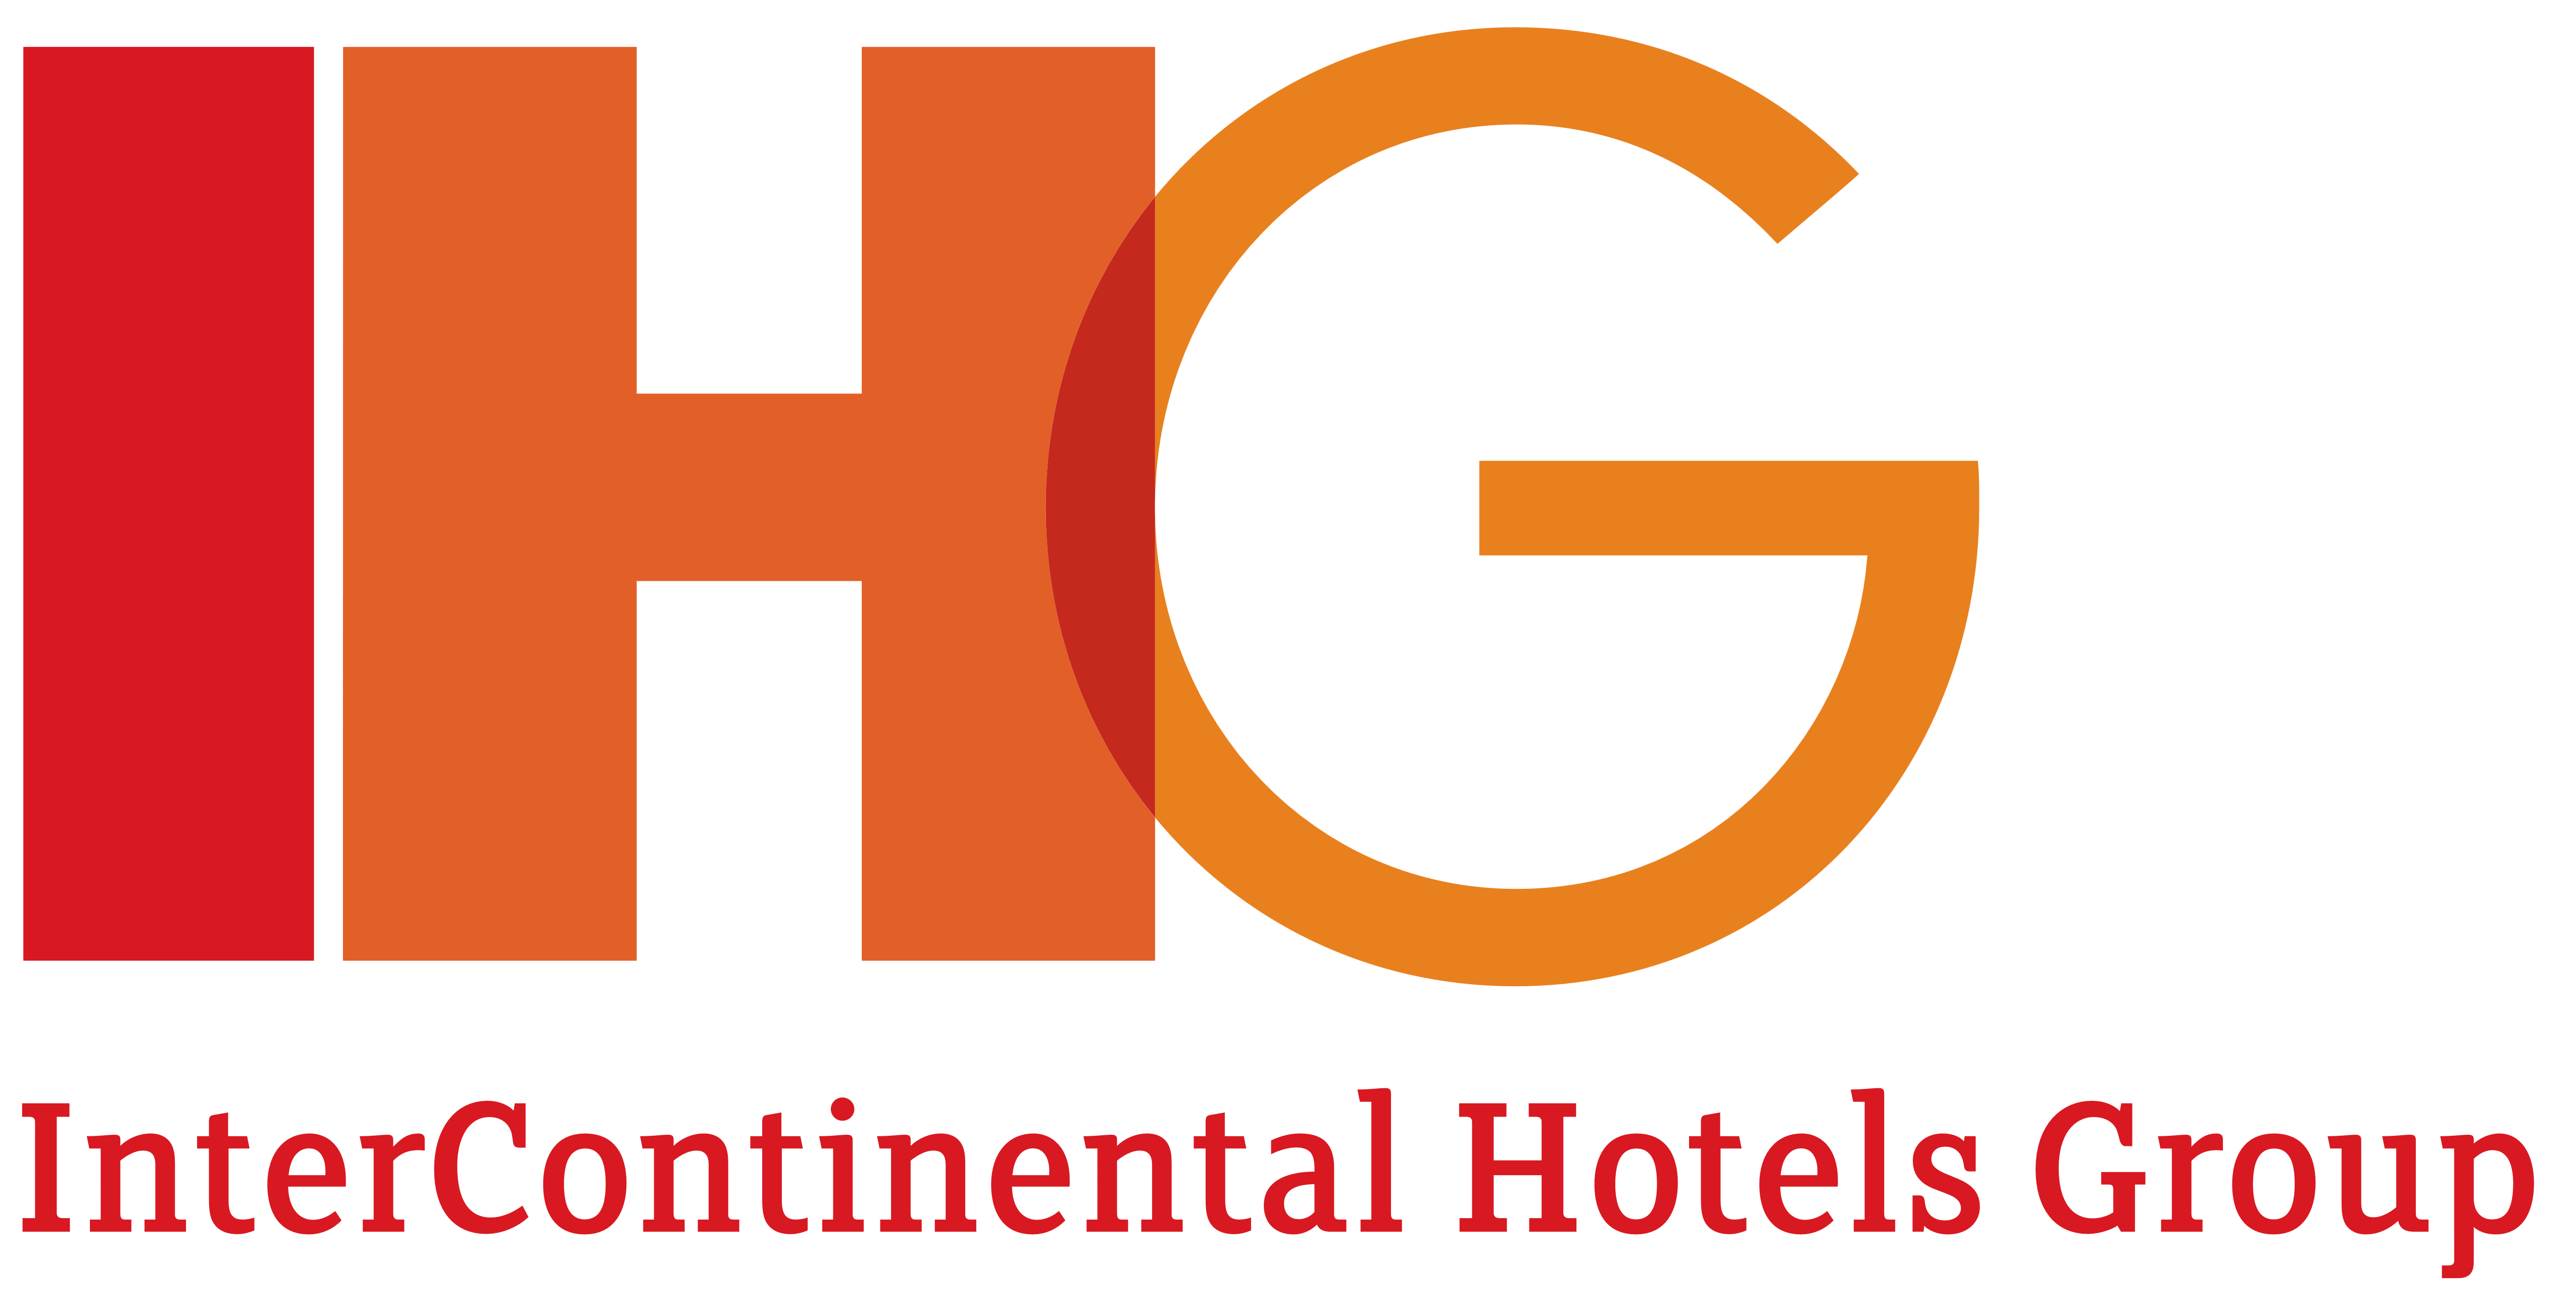 IHG_logo_InterContinental_Hotels_Group